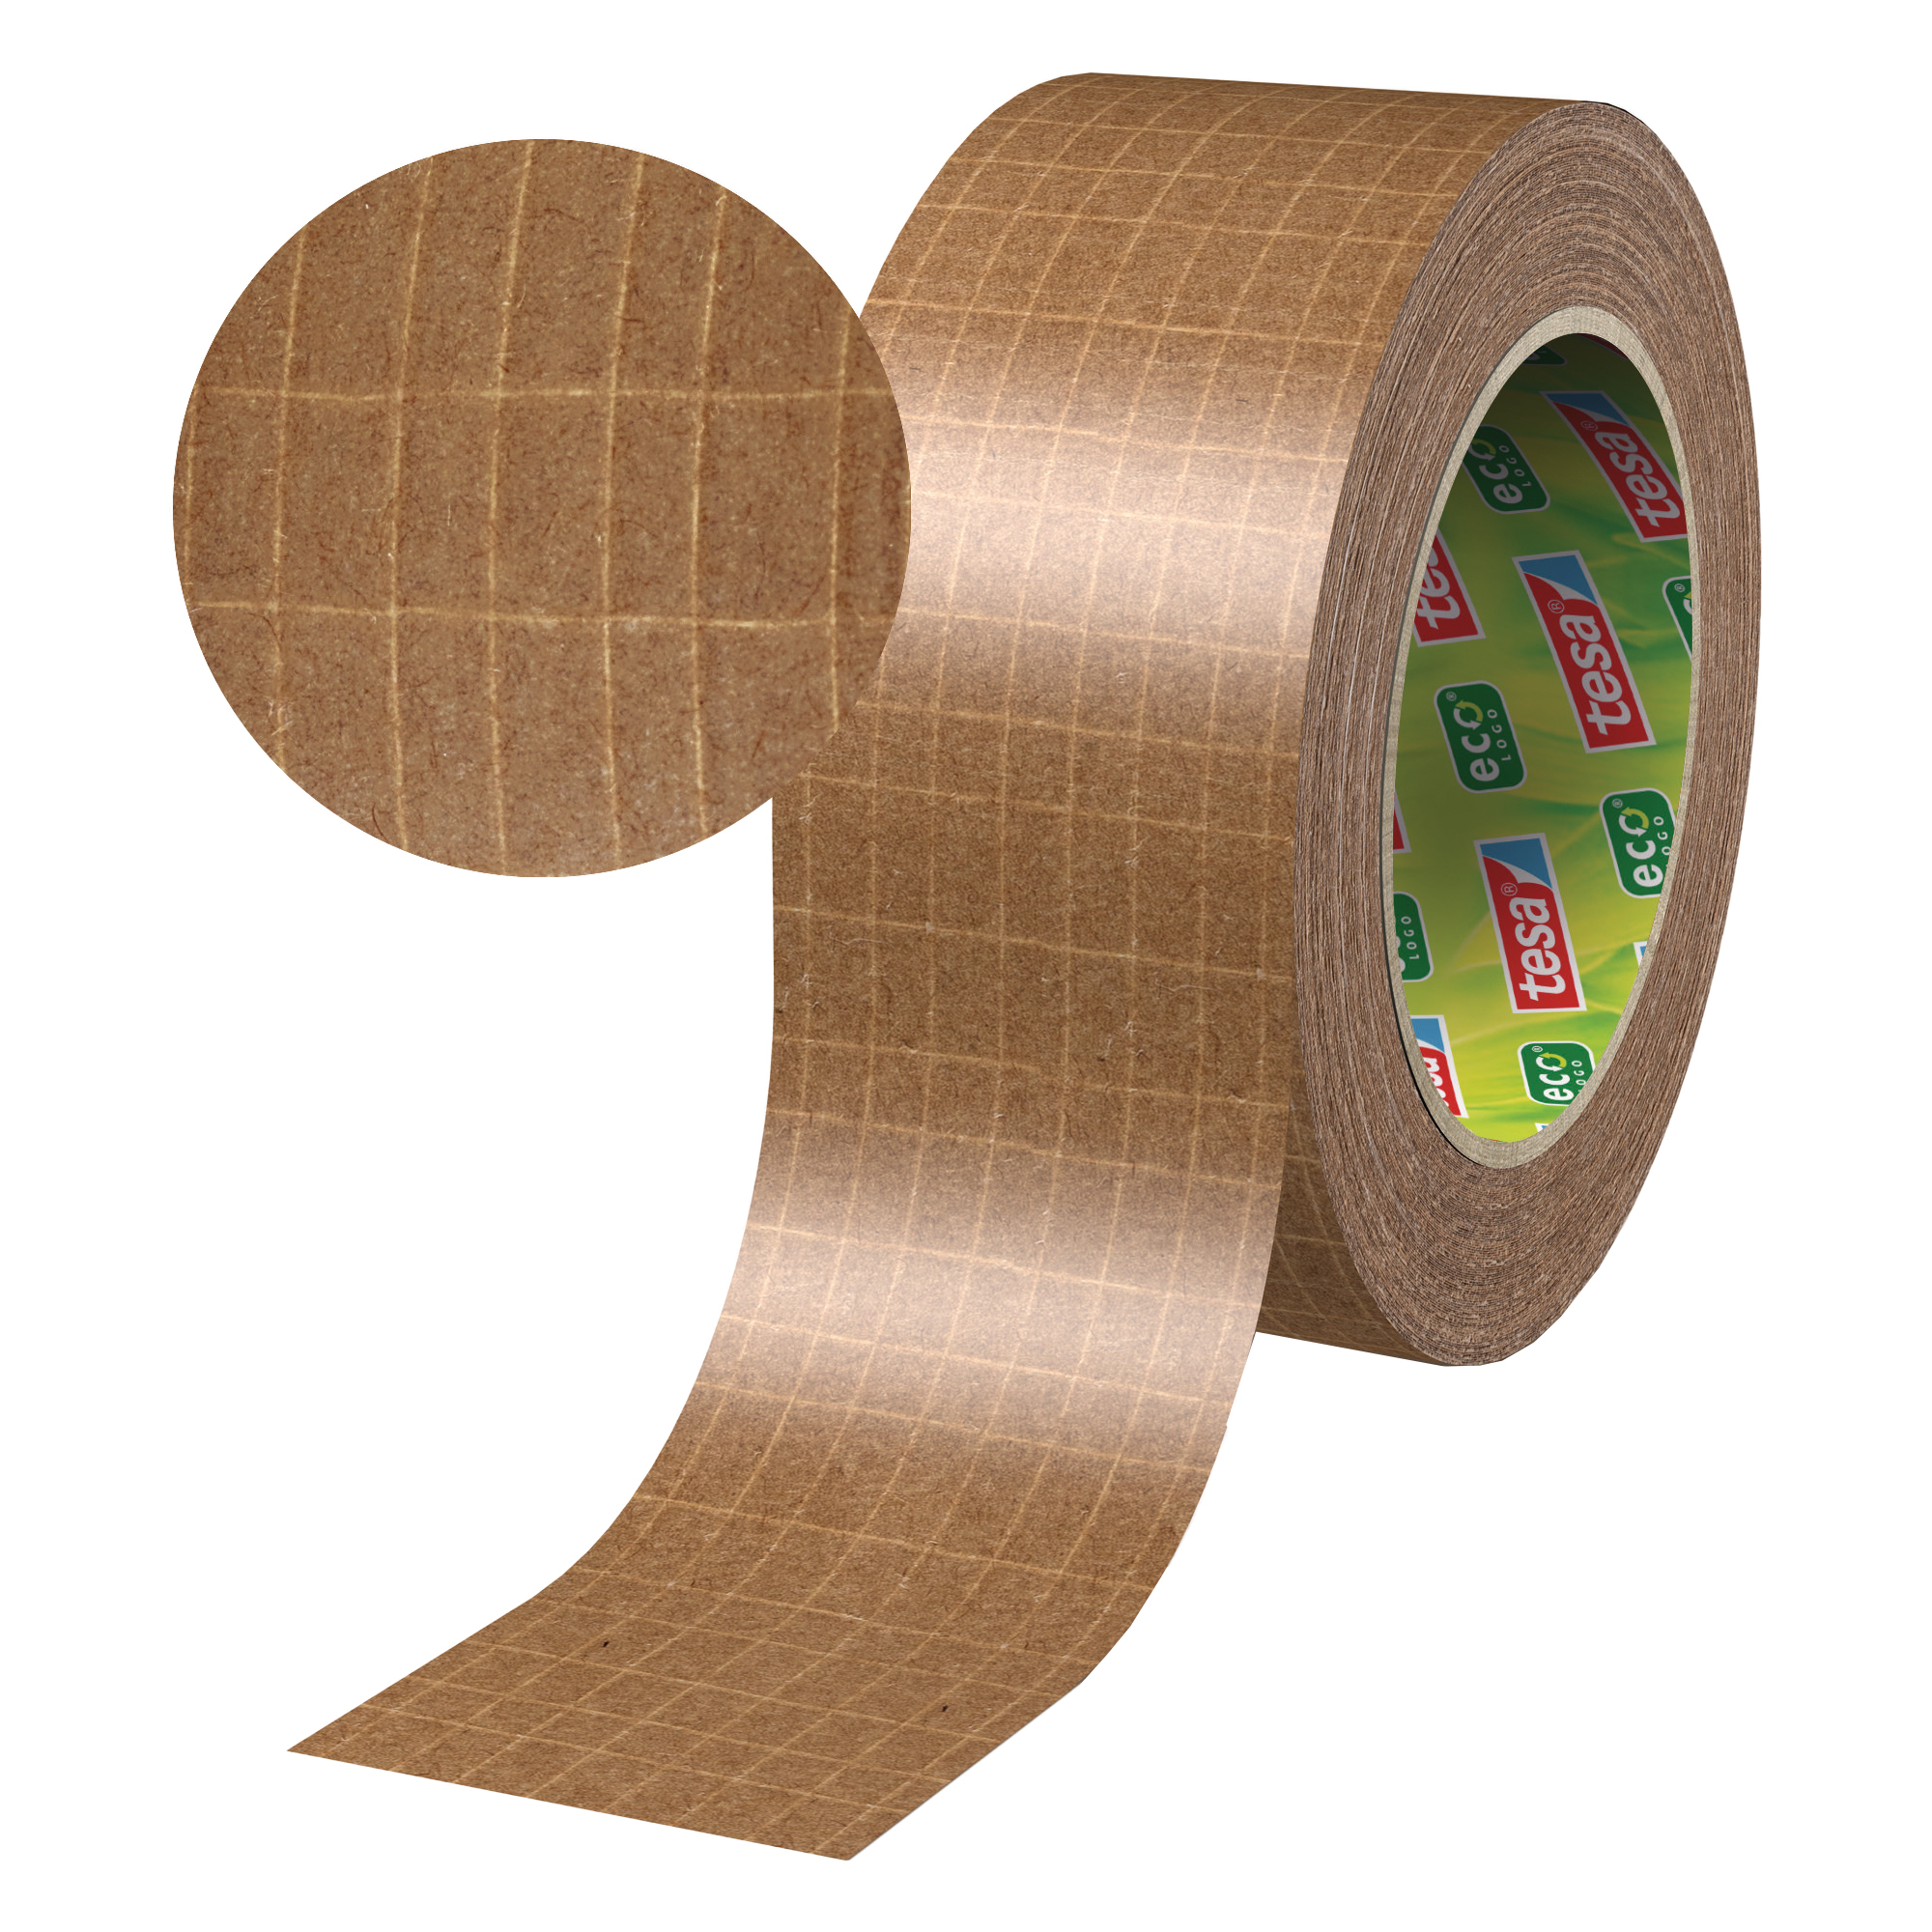 Nastro adesivo Tesapack Eco - paper ultra strong ecoLogo - 25 m x 50 mm - avana - Tesa